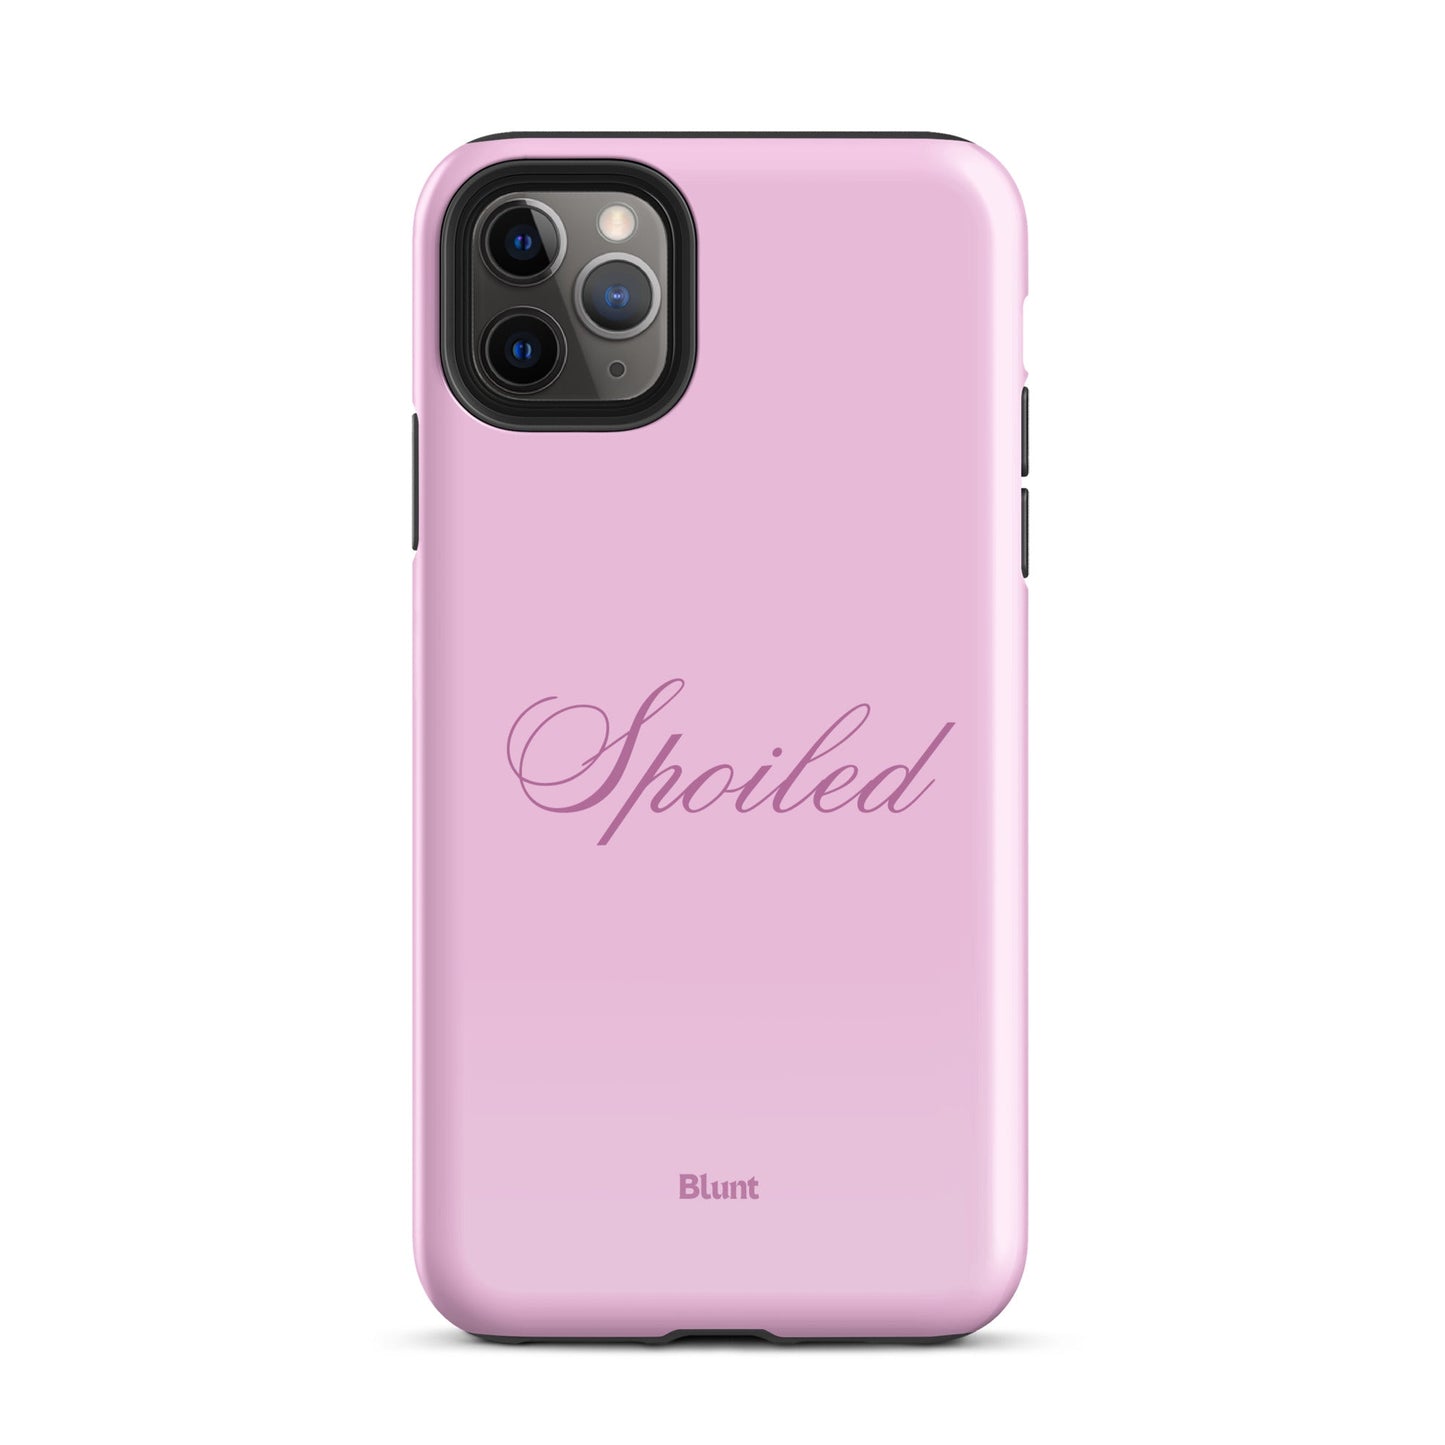 Spoiled iPhone Case - blunt cases